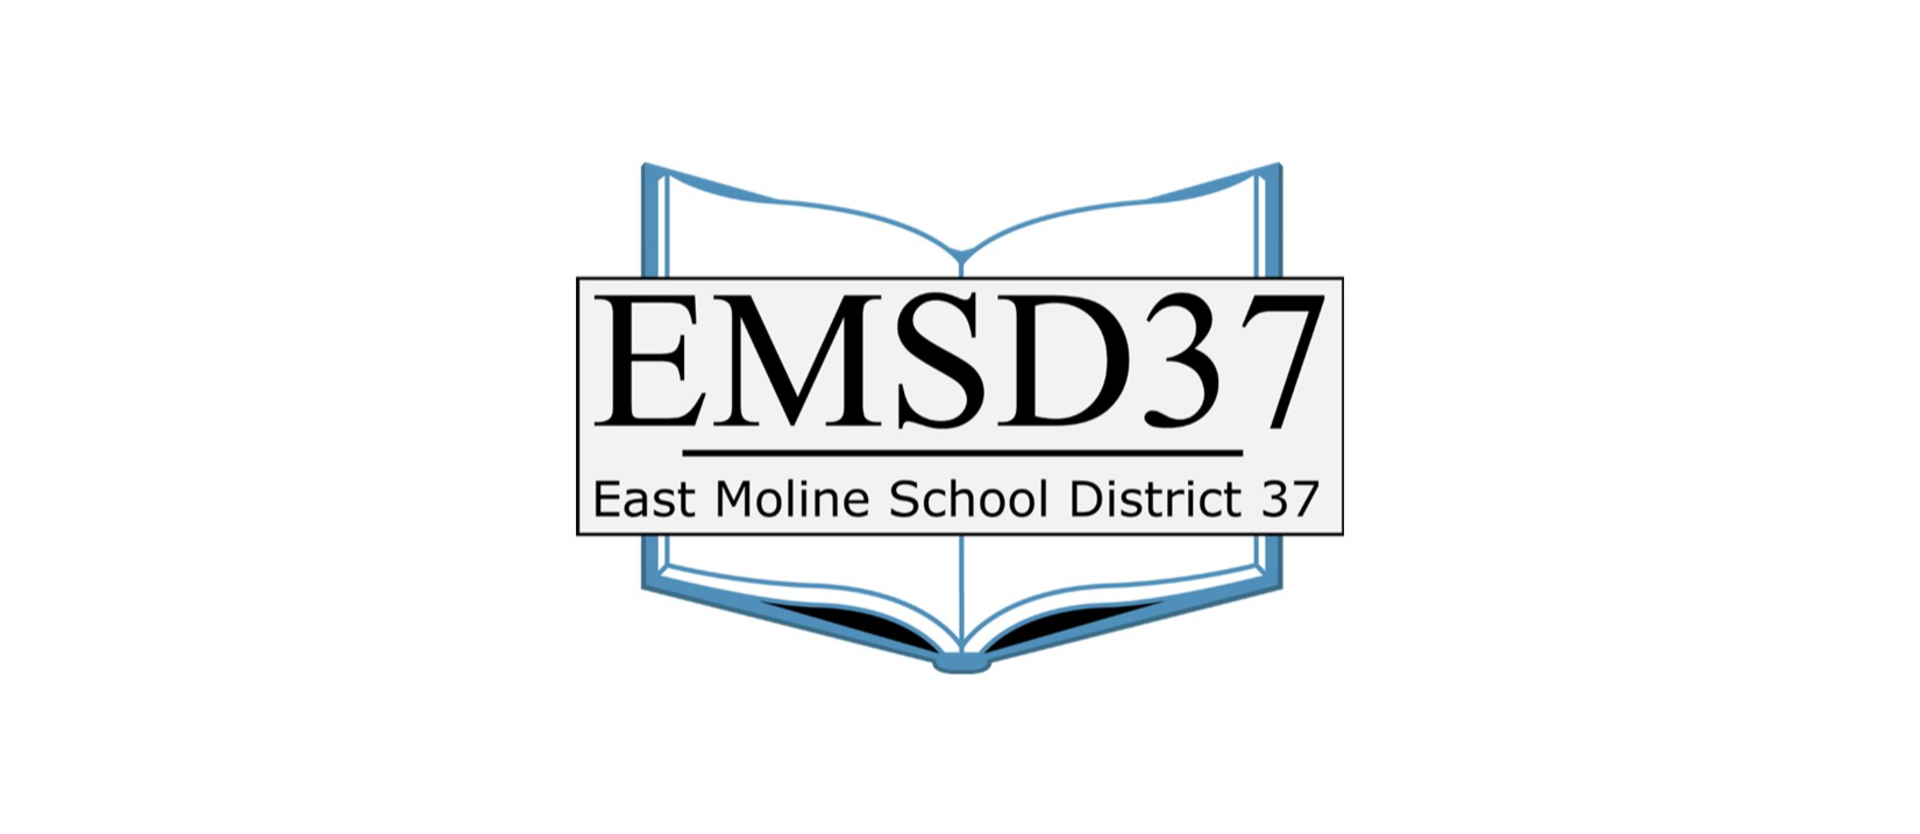 East Moline School District 37